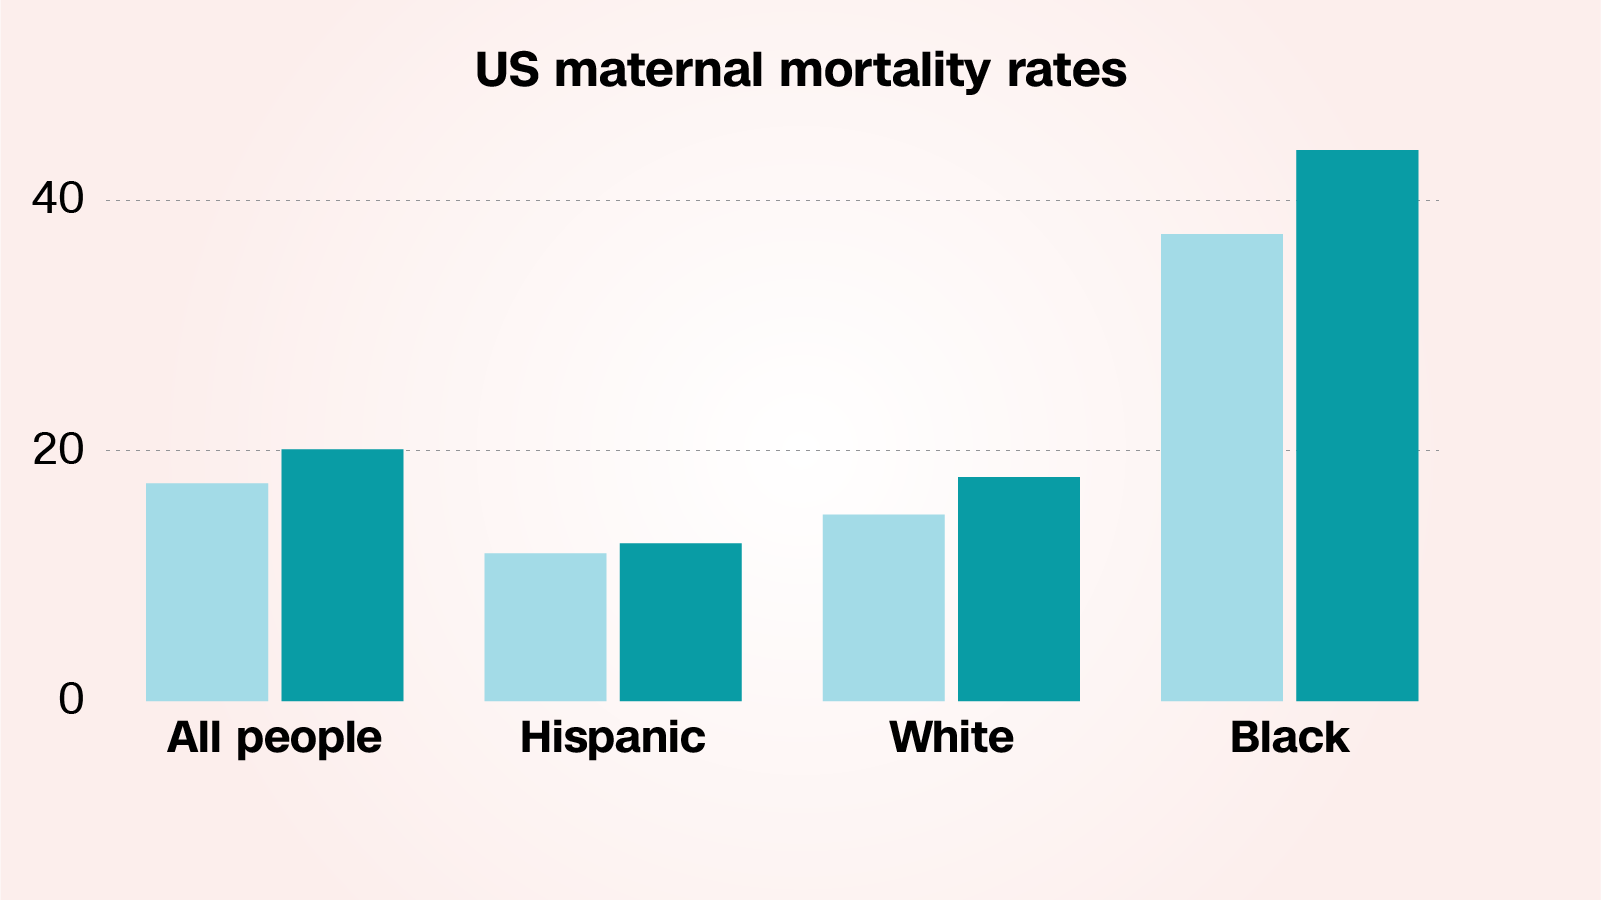 Racism and Sexism Underlie Higher Maternal Death Rates for Black